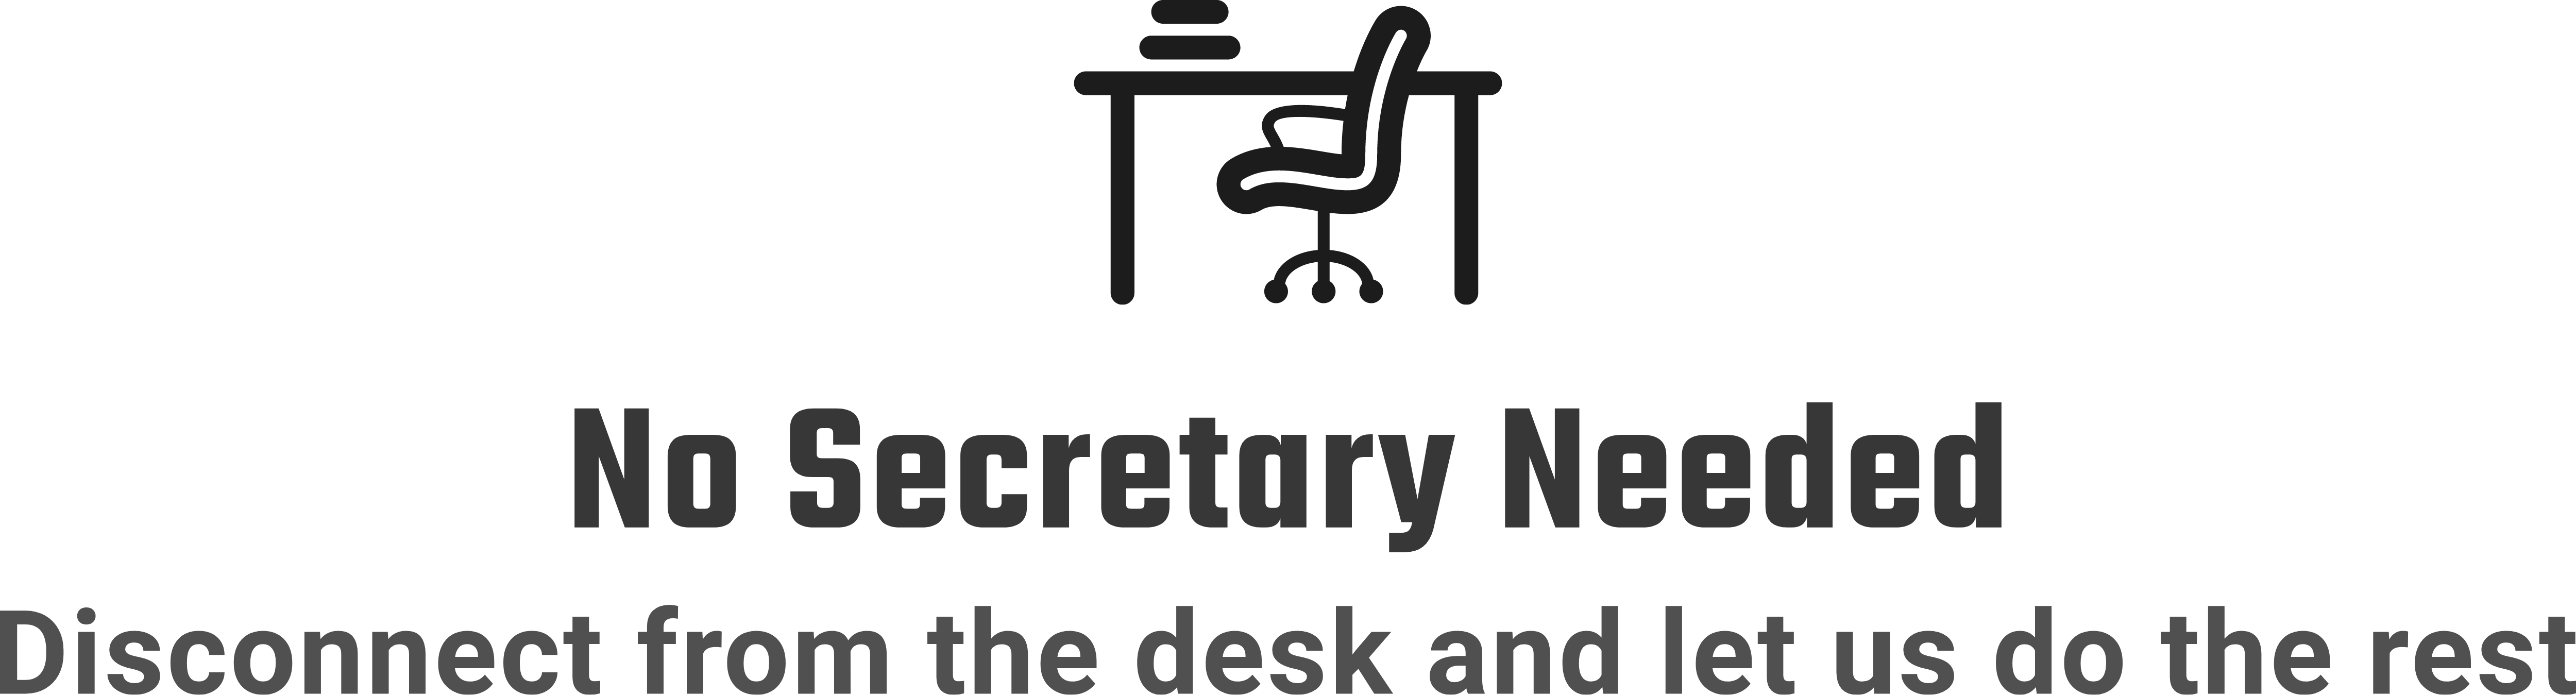 No Secretary Needed